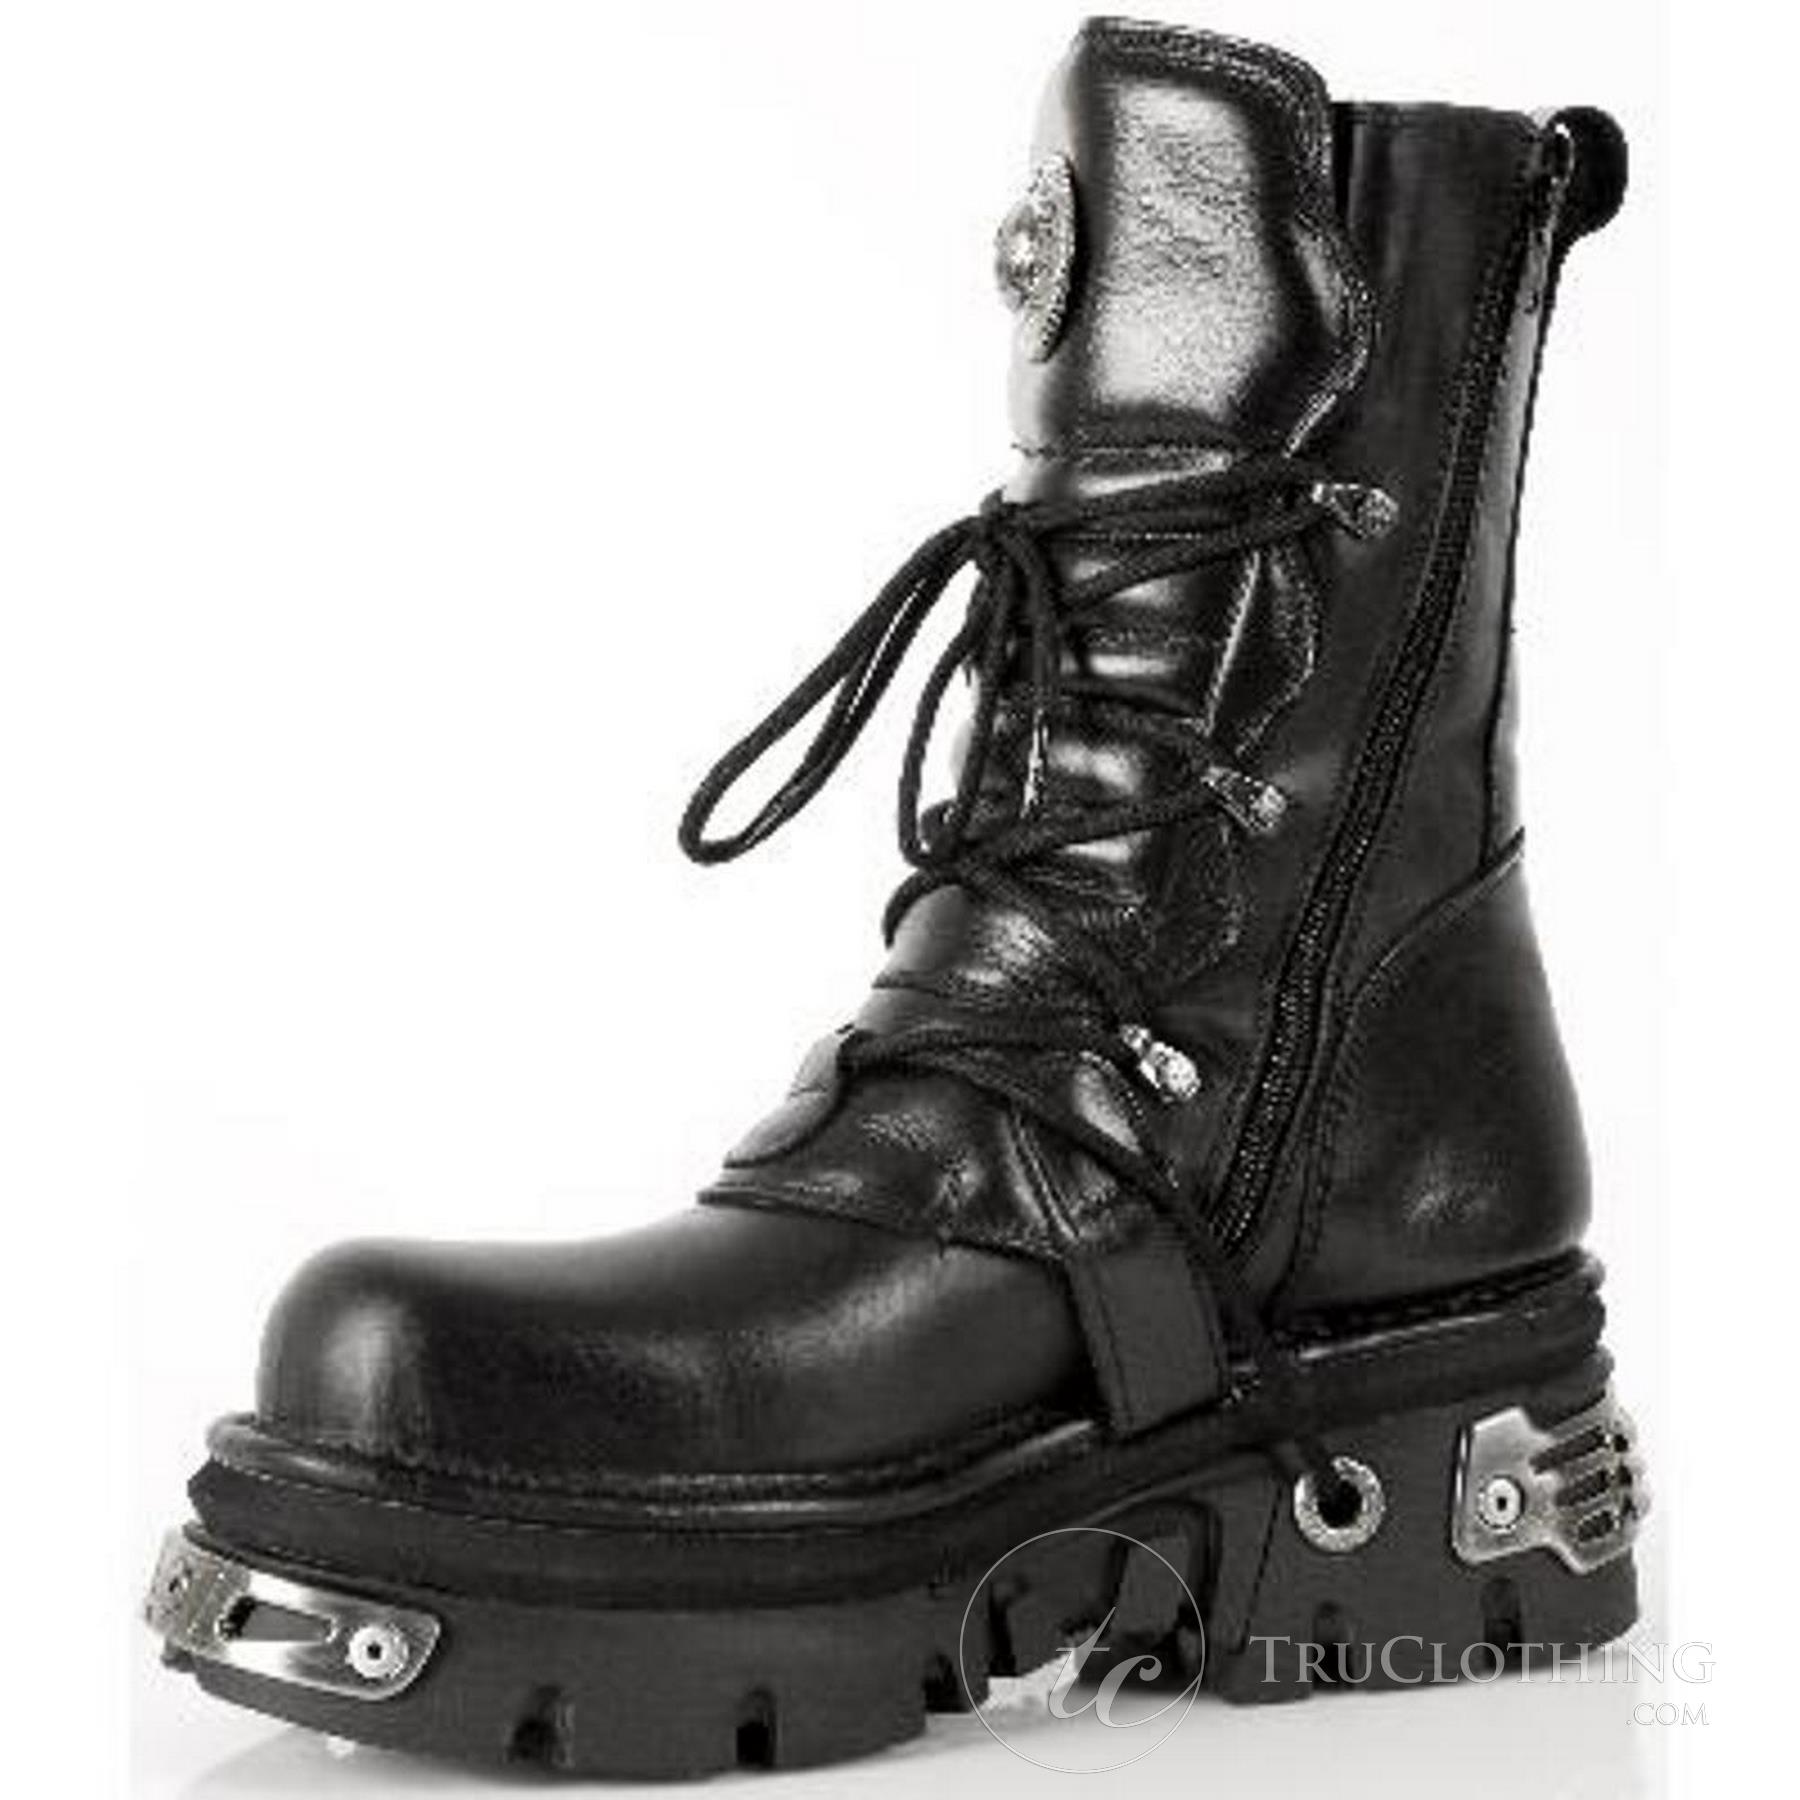 Рокерские ботинки. New Rock ботинки Boot Metallic m - 373 4s. New Rock 373 s4. Байкерские ботинки New Rock мужские. Ботинки New Rock черные.